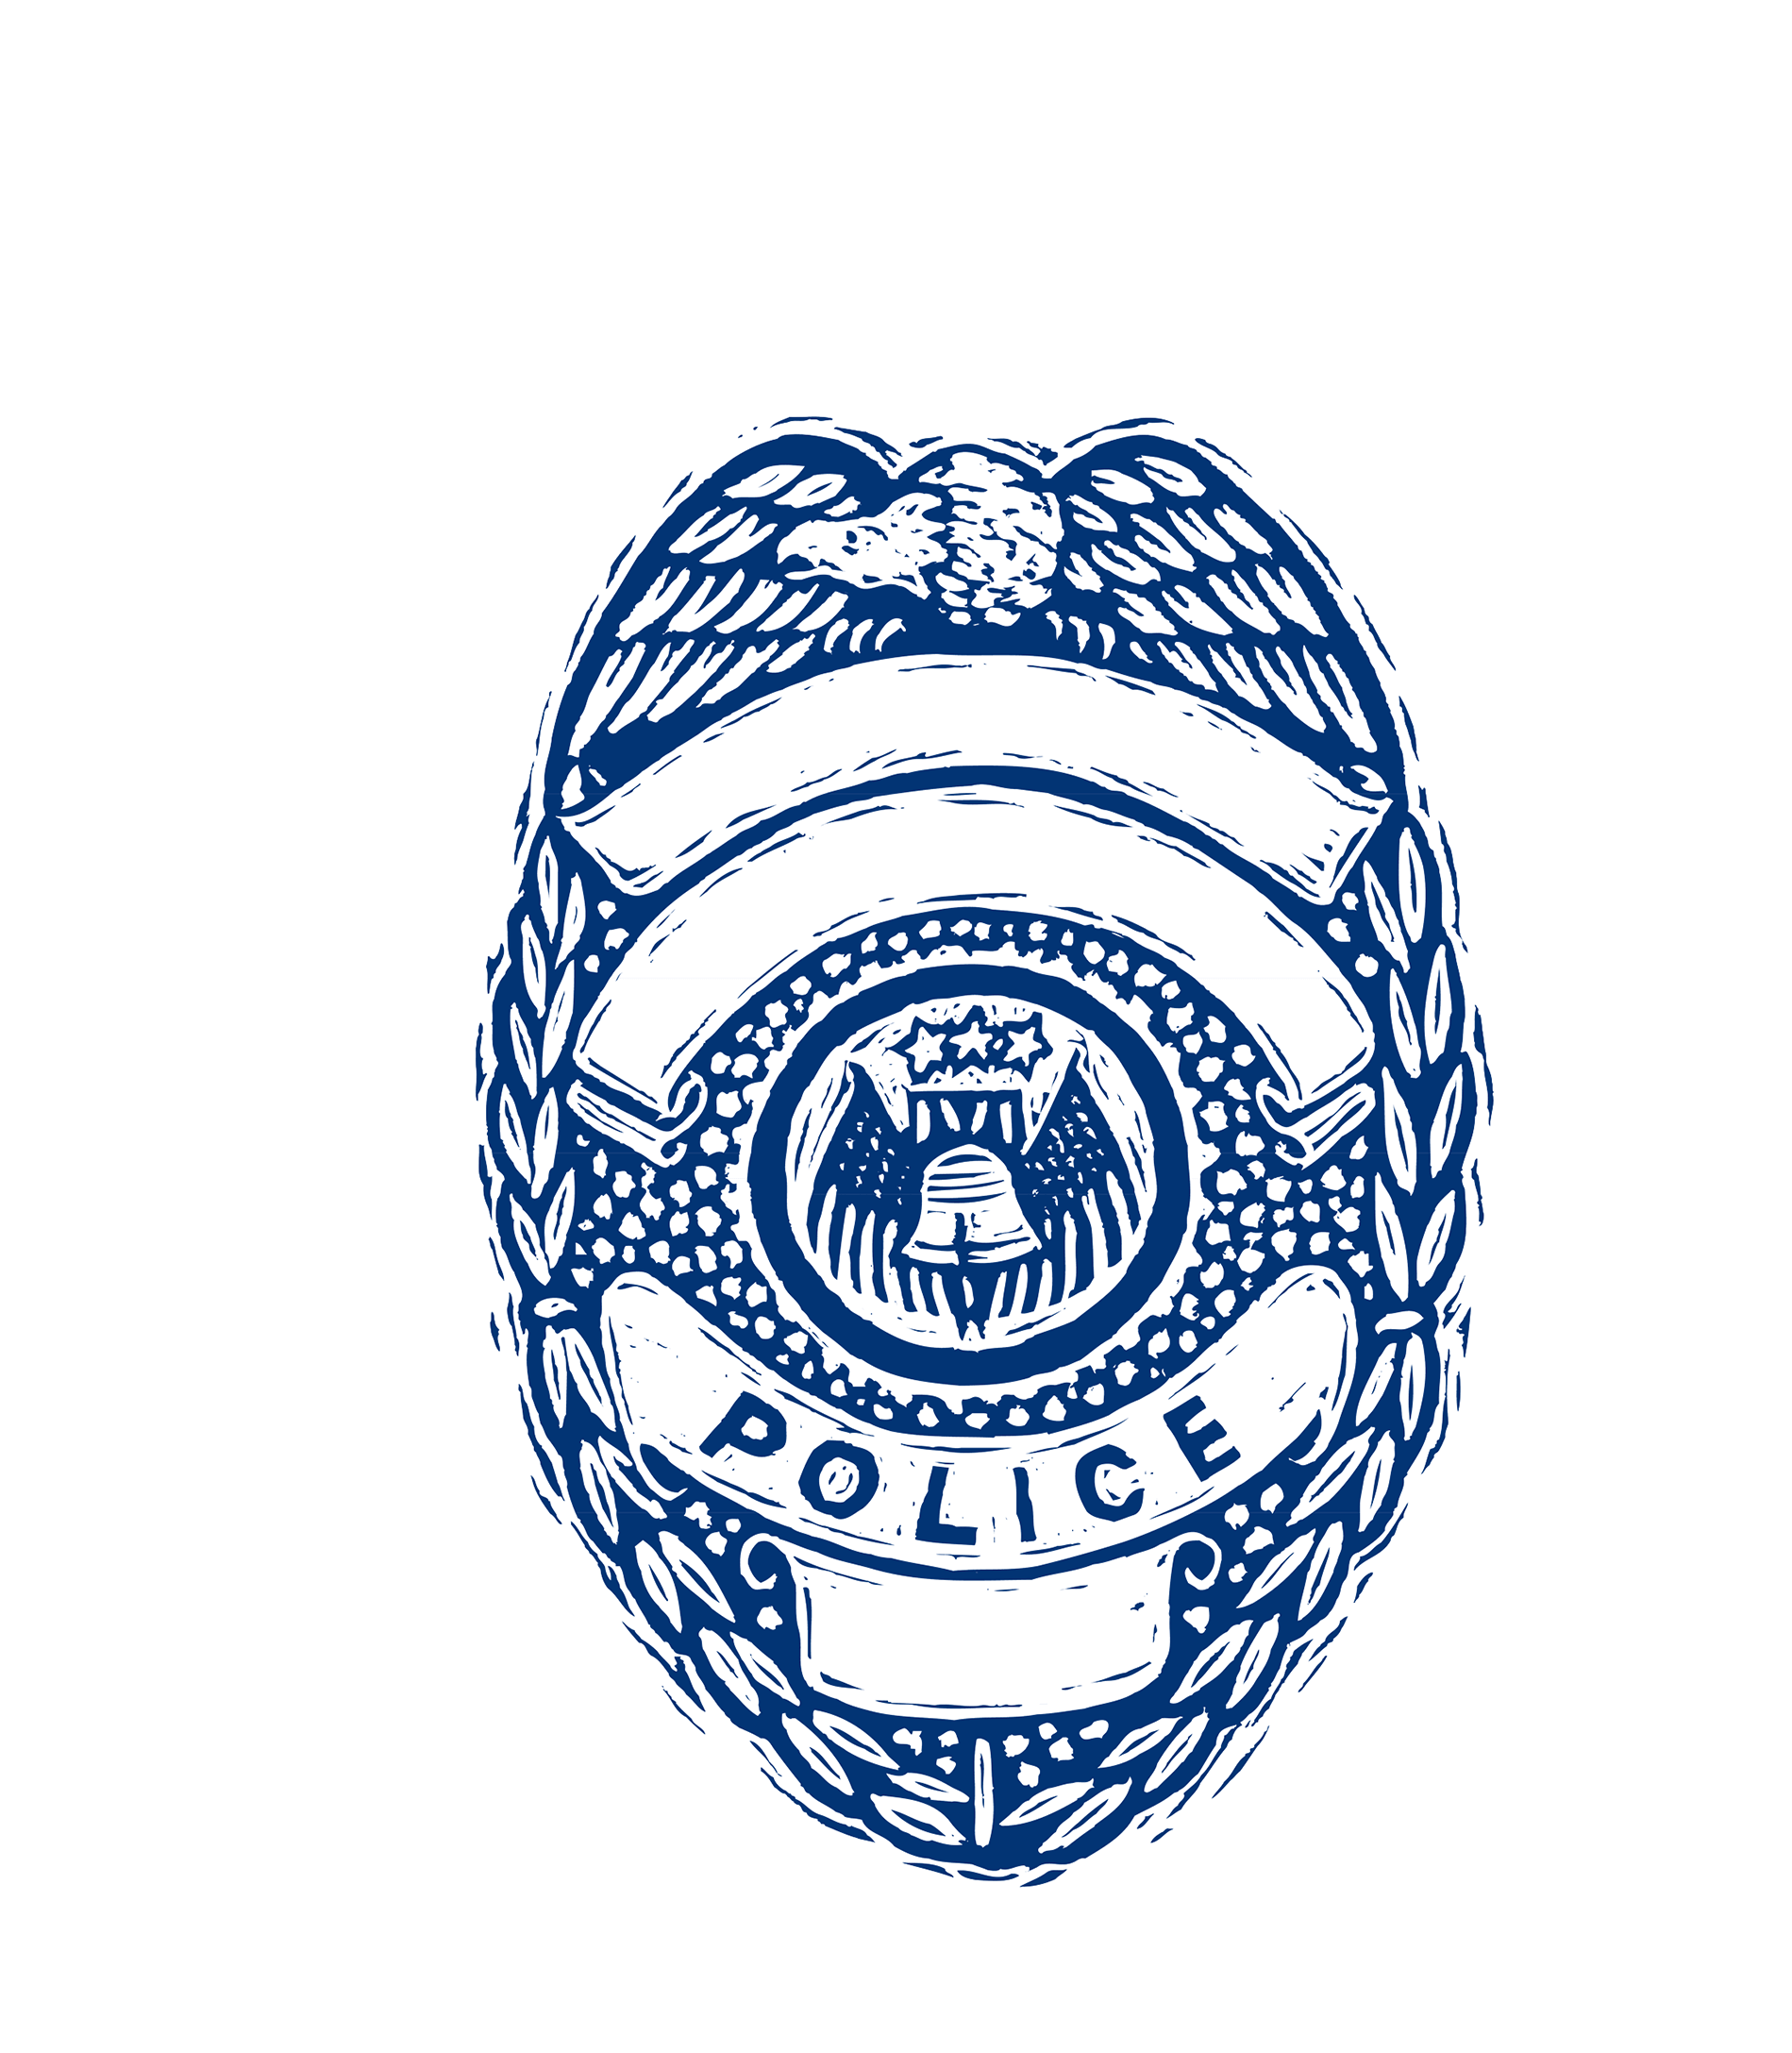 Illustration of a law enforcement badge